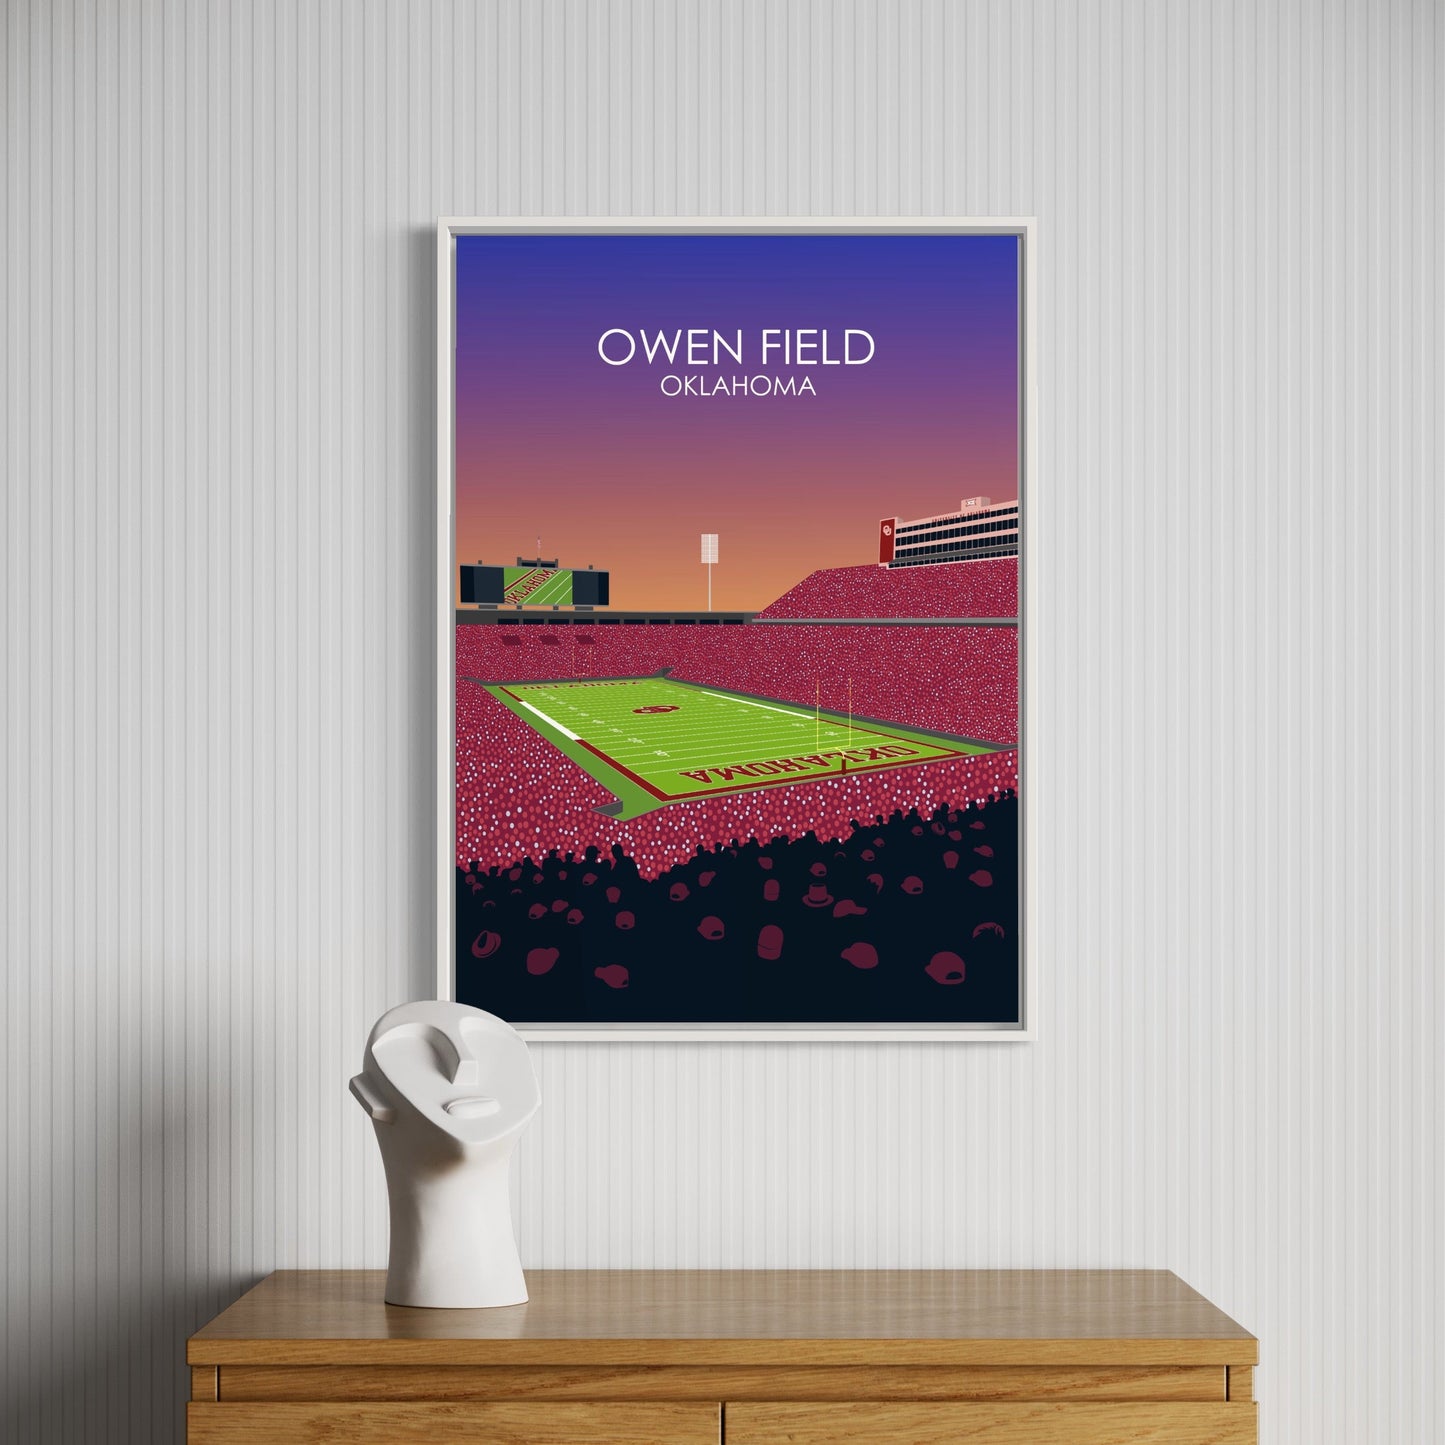 Owen Field - Gaylord Family - Oklahoma Memorial Stadium Print | University of Oklahoma Sooners College Football Stadium Print